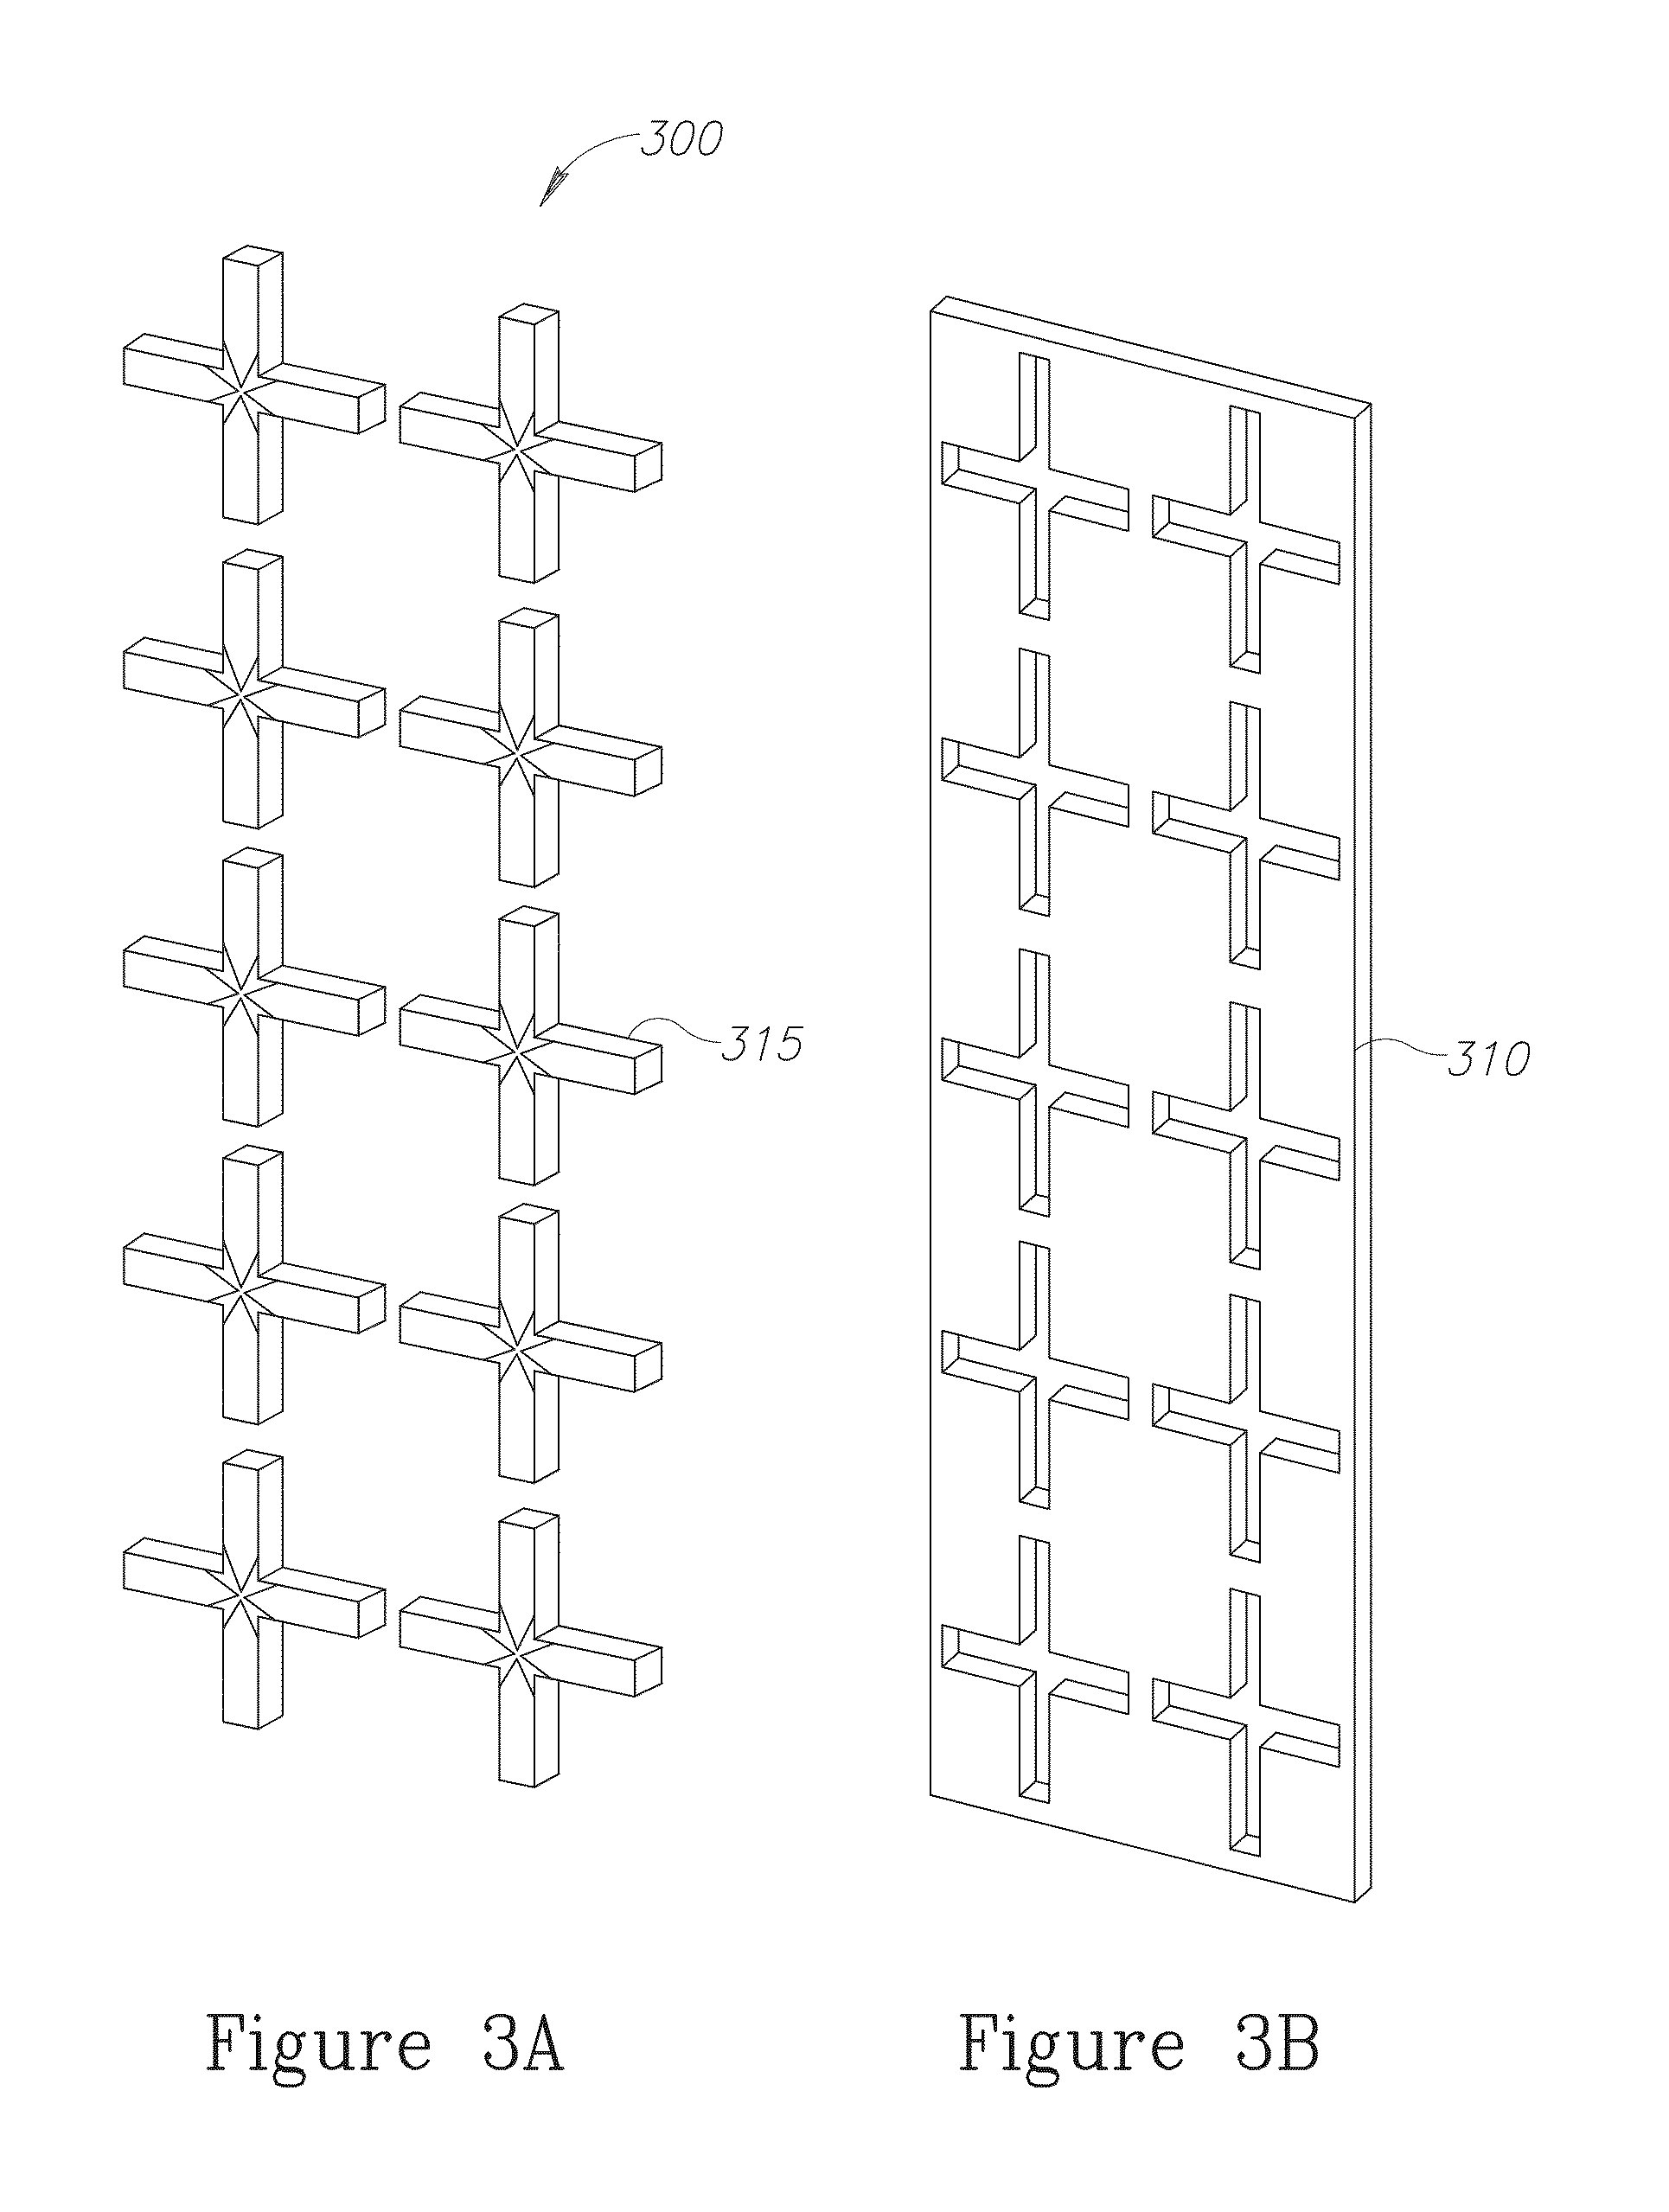 Printed antenna having non-uniform layers